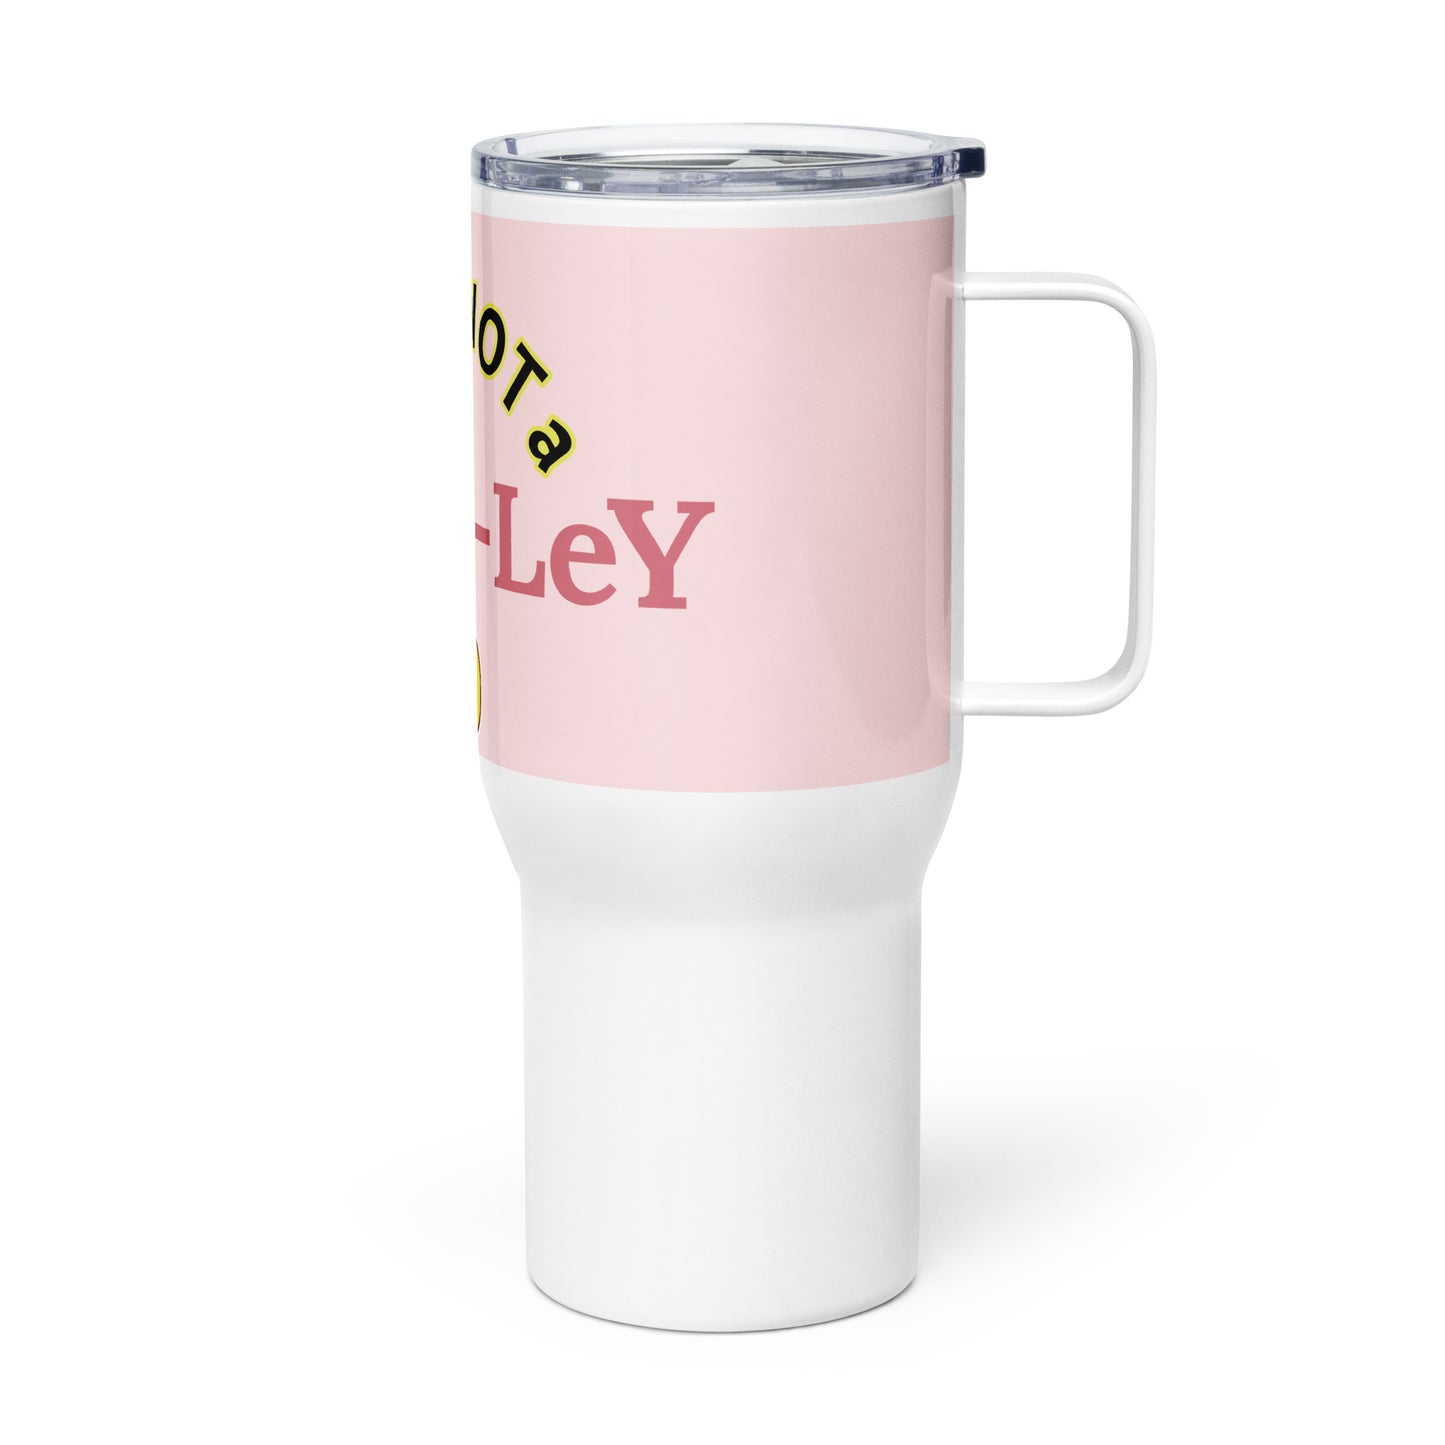 NOT a Sta-N-Ley Travel Mug